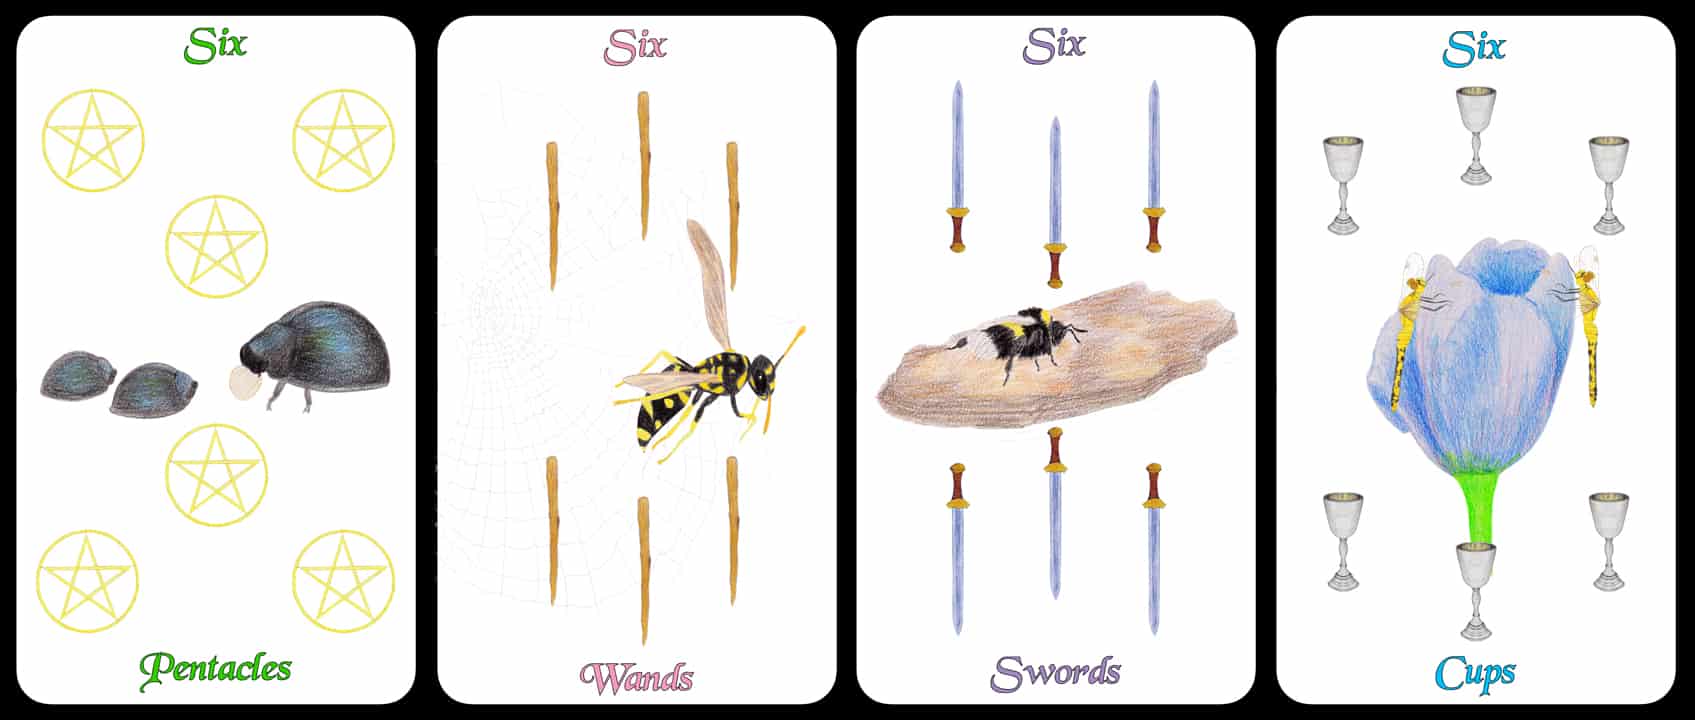 The Sixes - The Arthropoda Tarot Deck by Linda Ursin